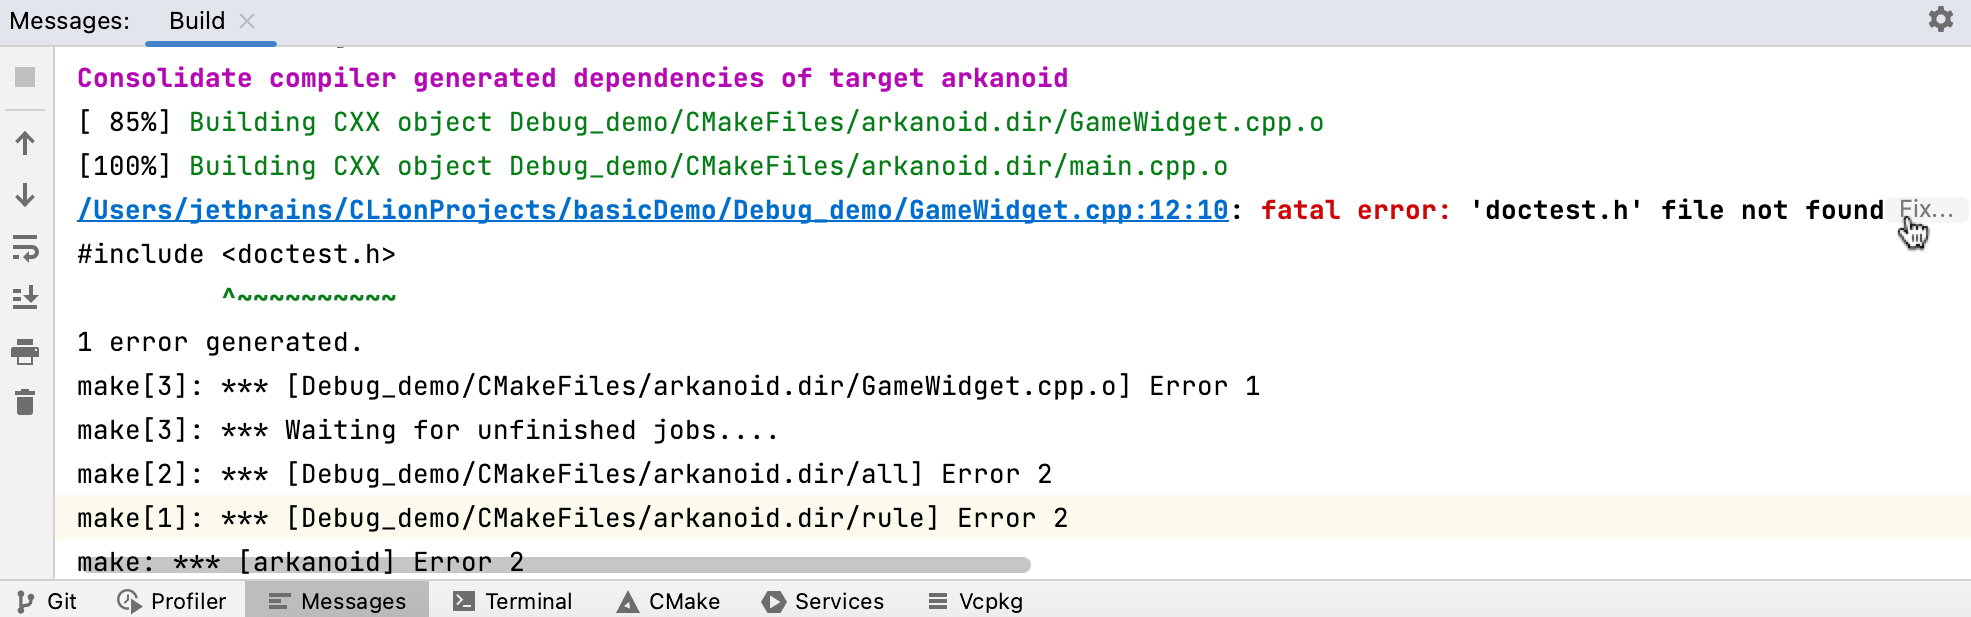 Quick-fix link in the build error message